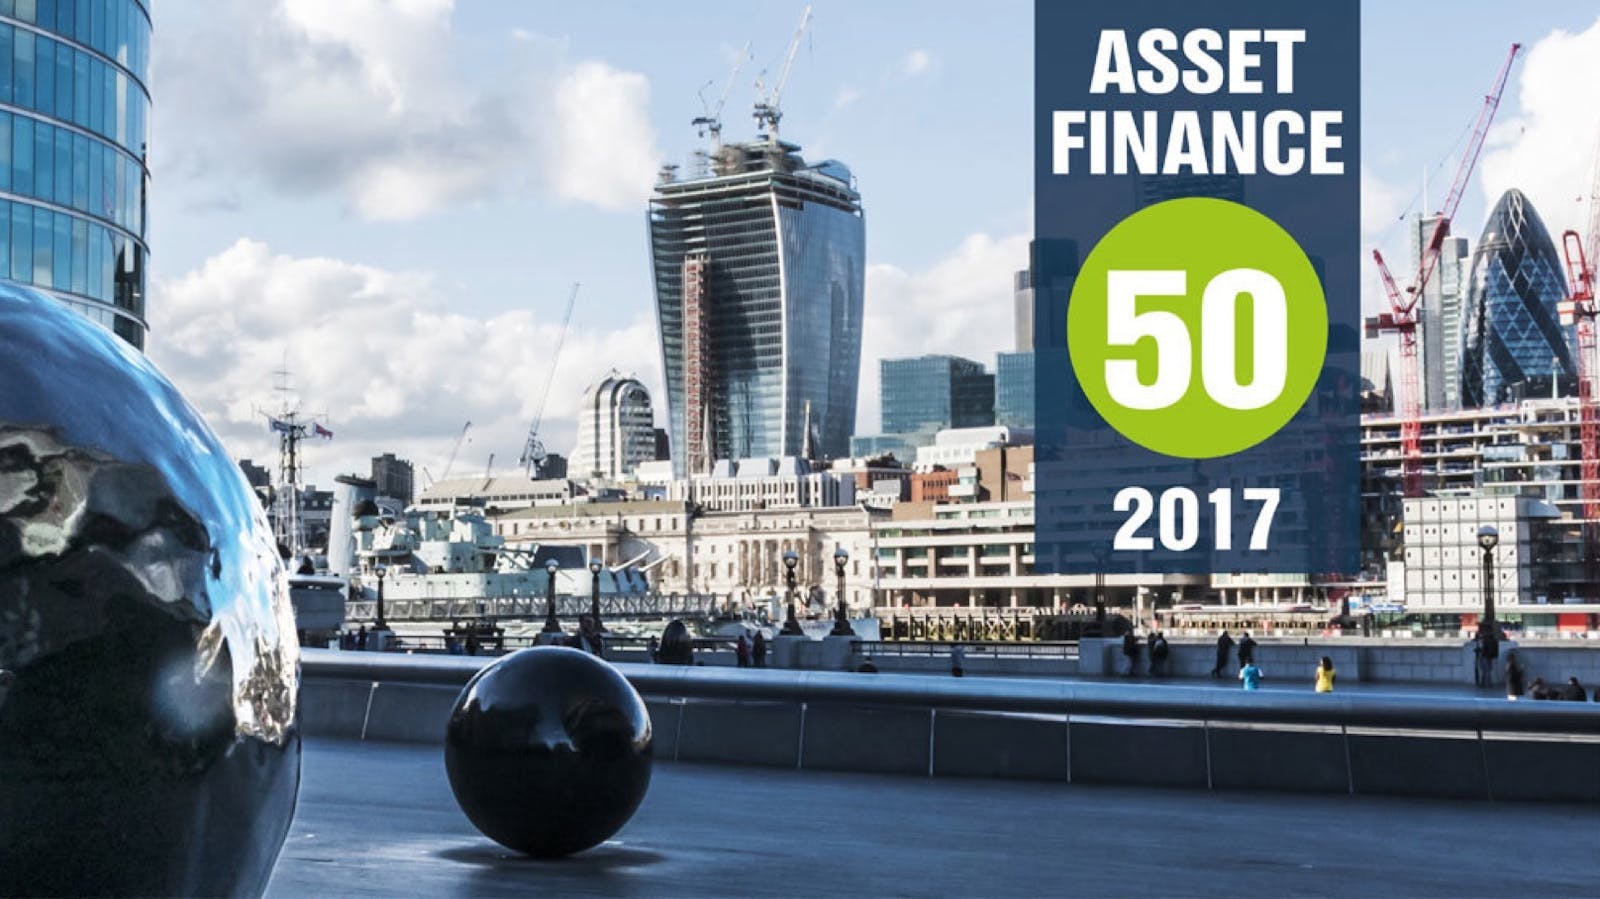 Asset Finance 50 2017 with London Skyline 